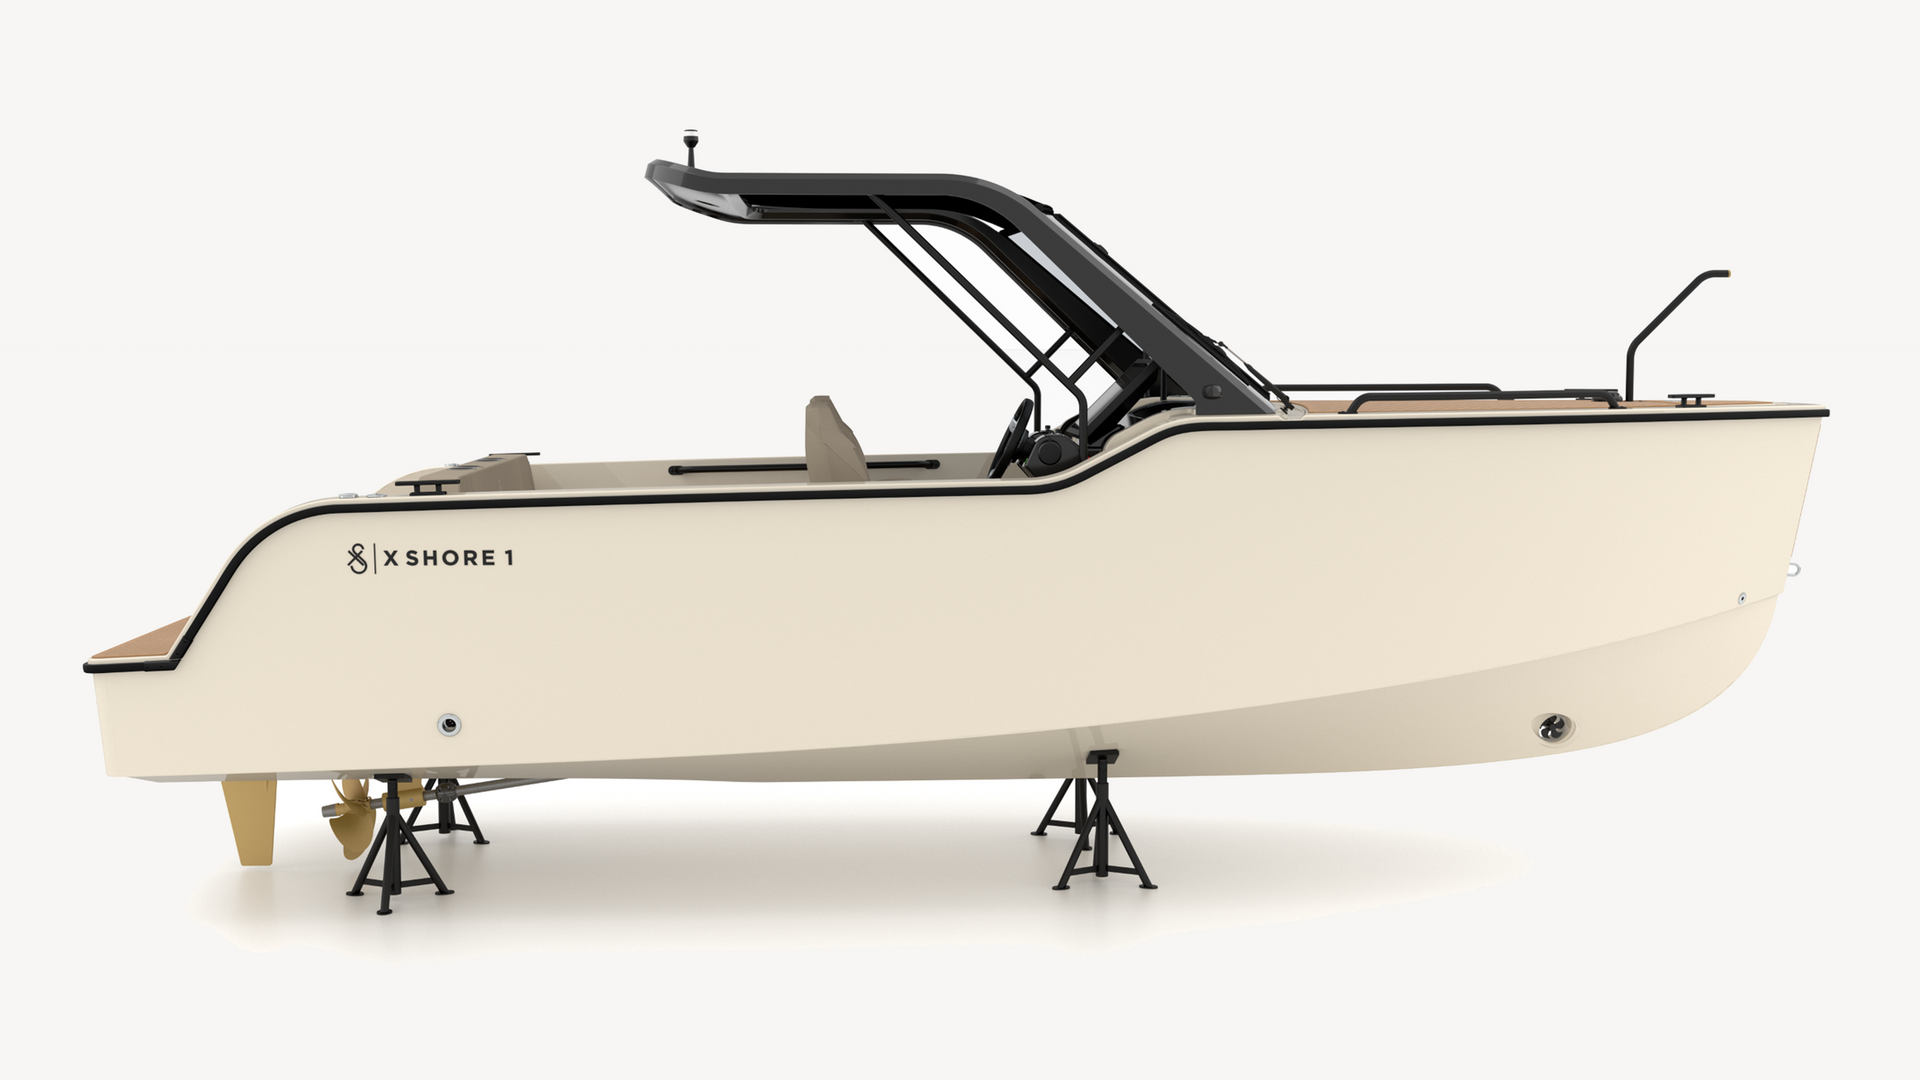 Electric Boat - X Shore 1